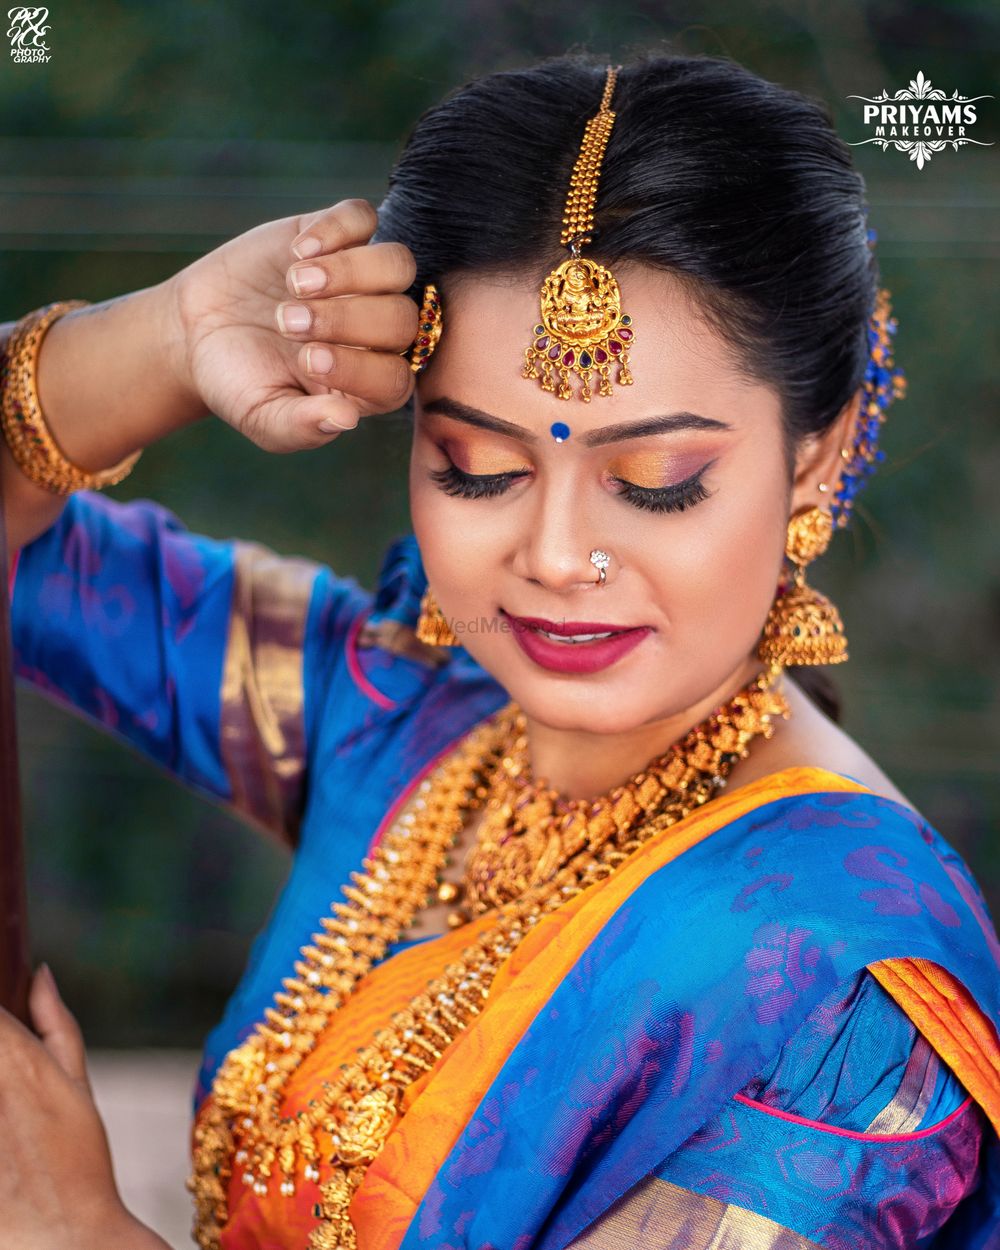 Photo By Priyams Makeover - Bridal Makeup